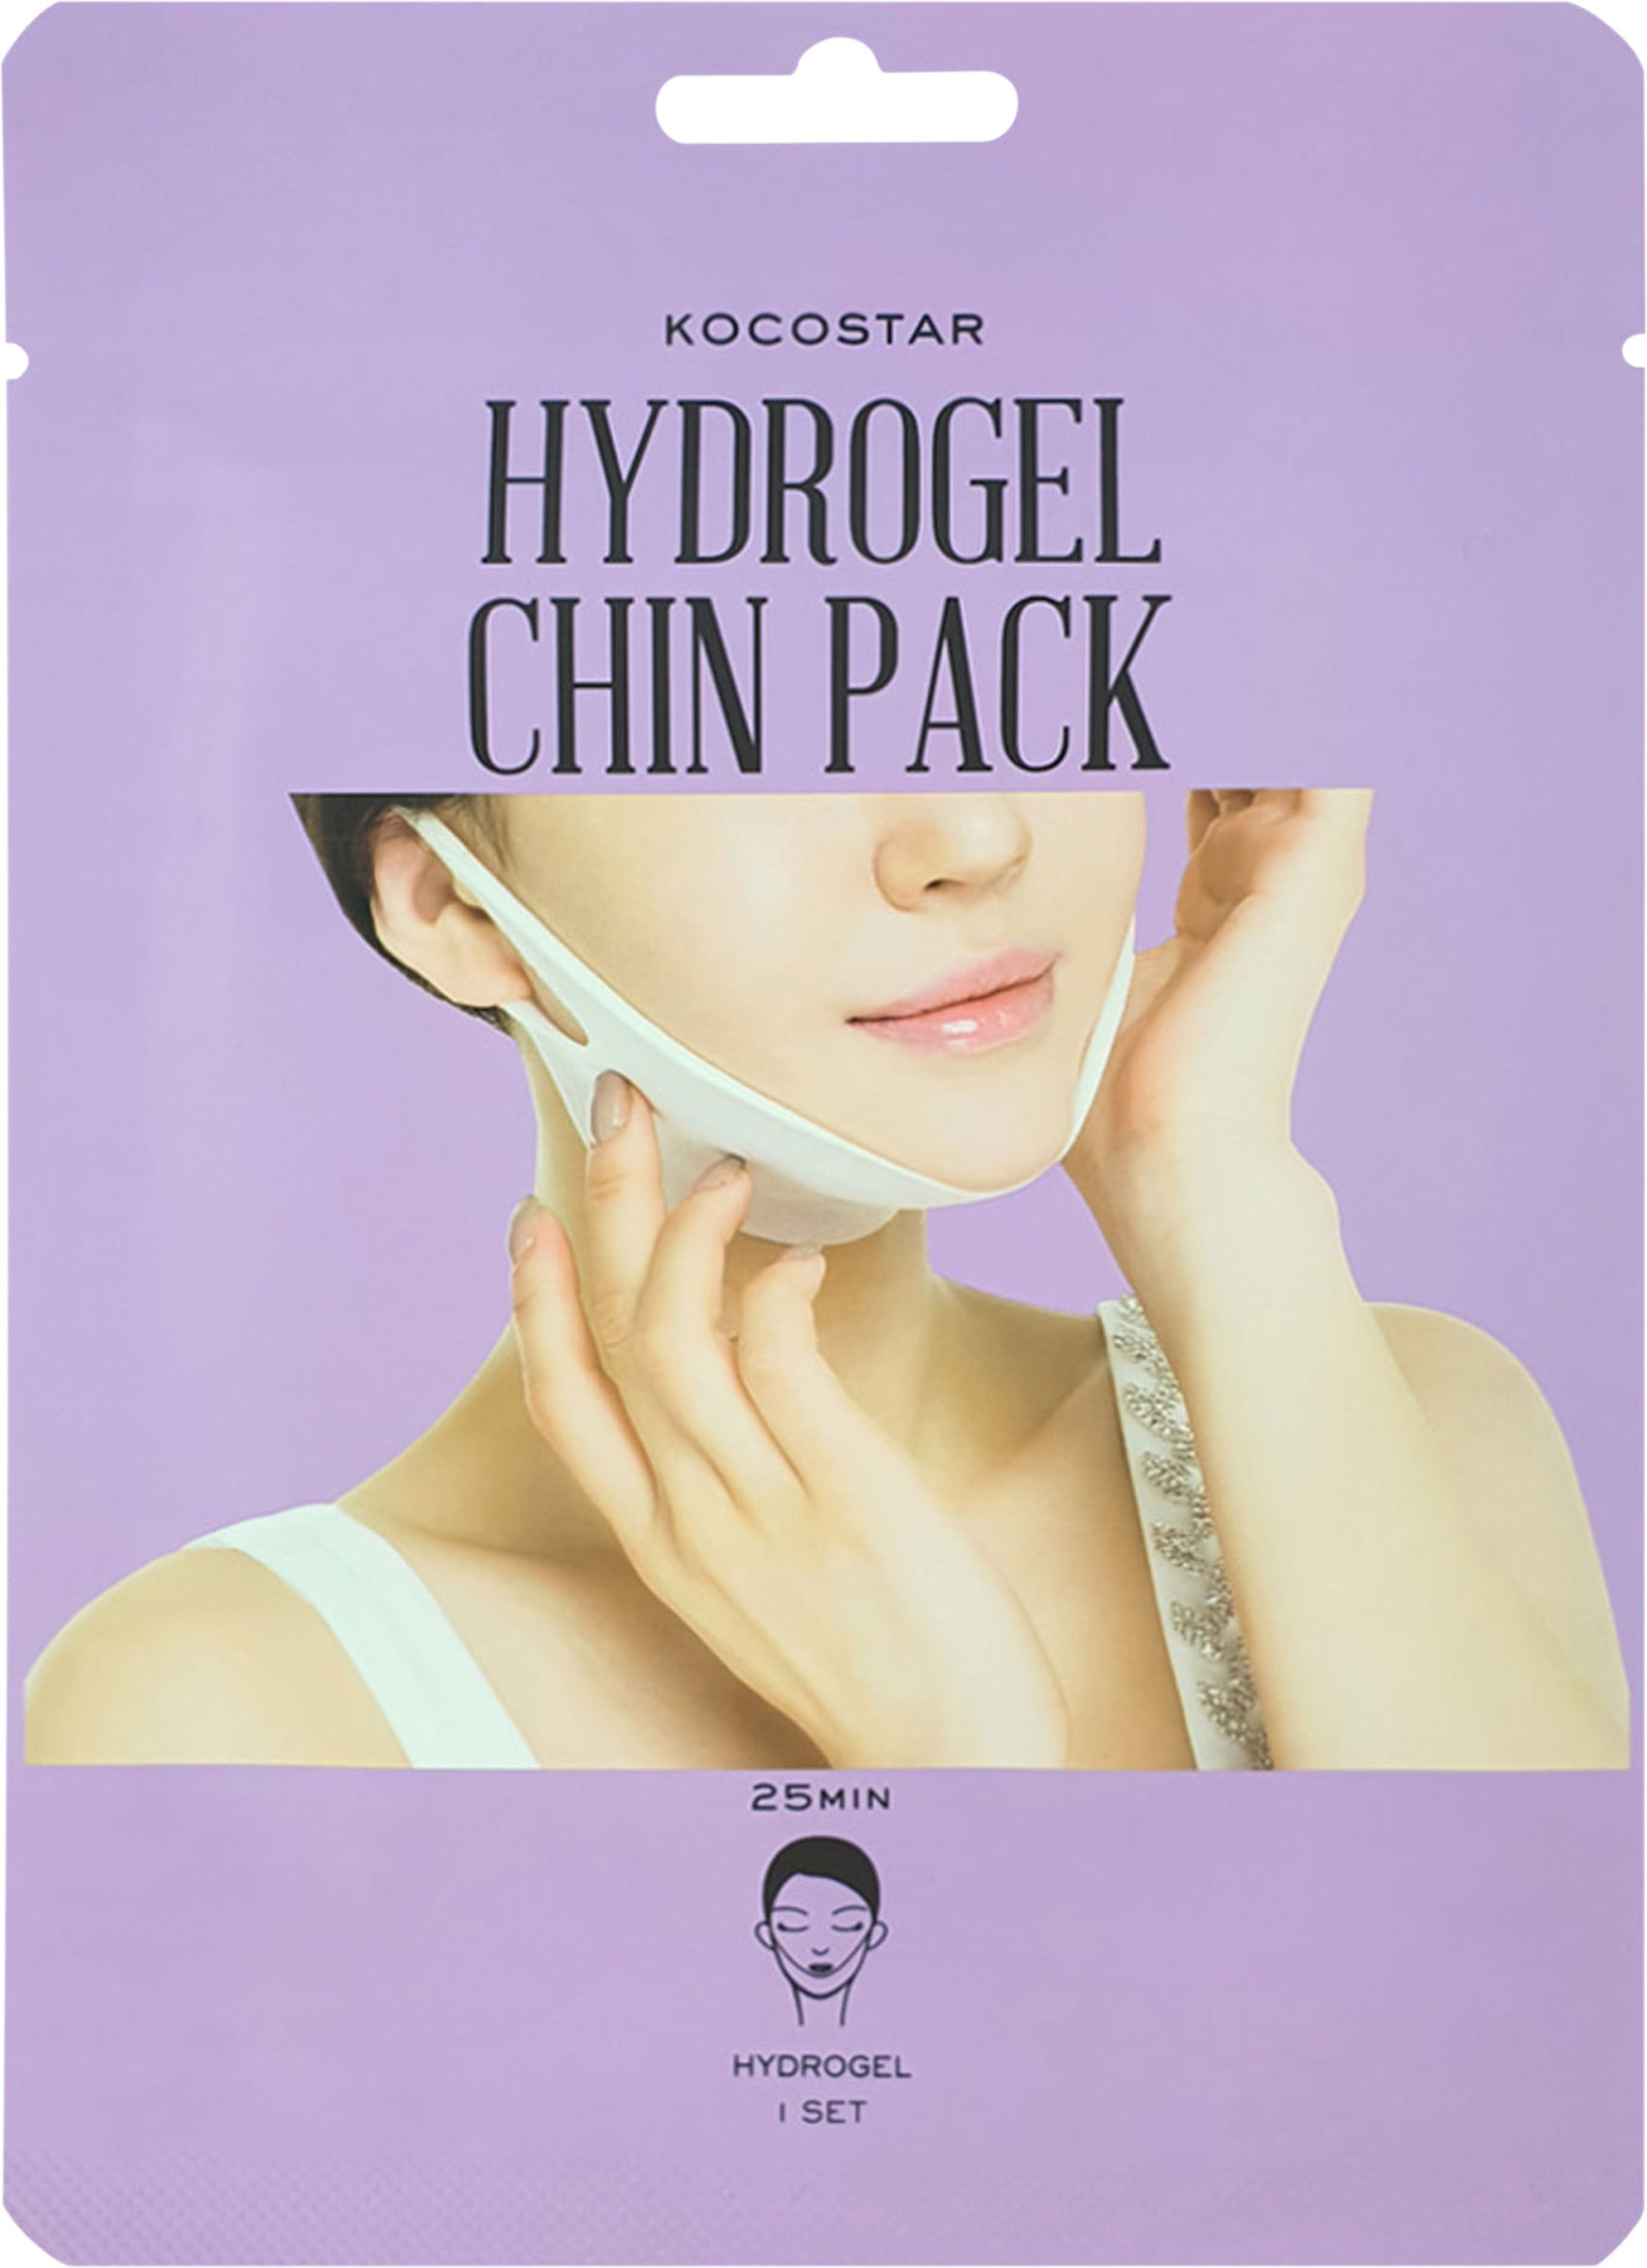 Kocostar Hydrogel Chin Pack 1 set